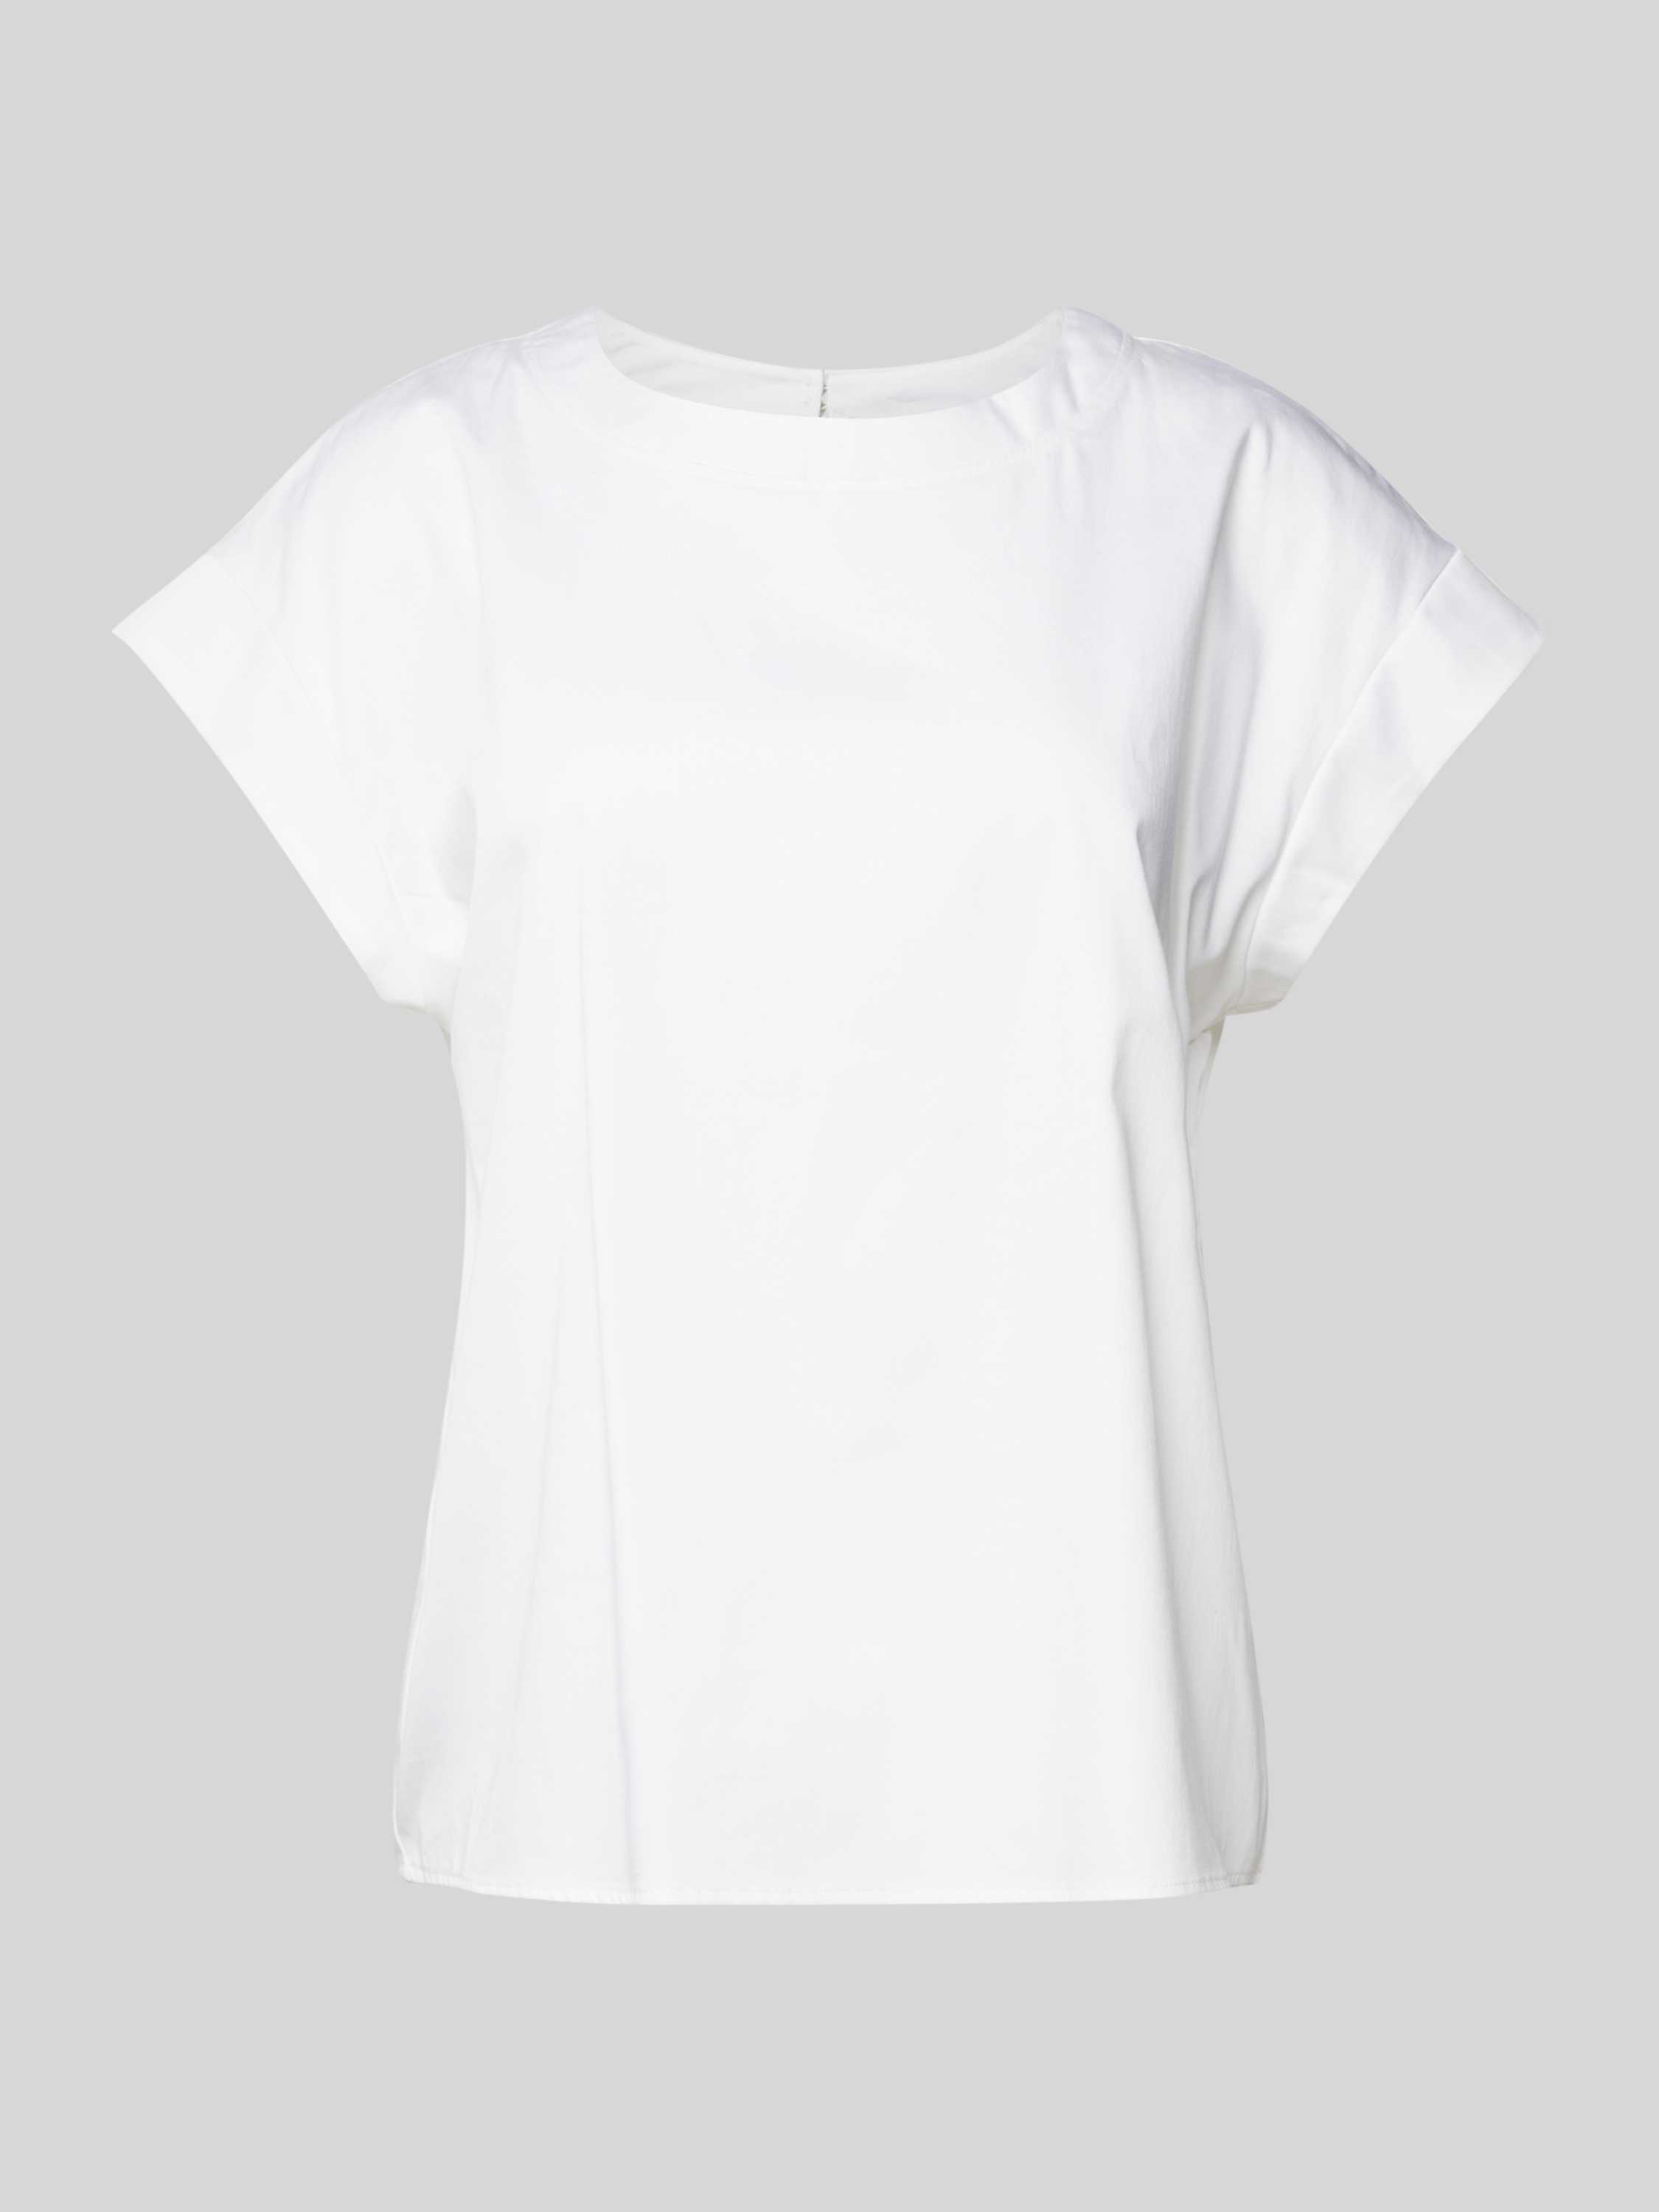 Christian Berg Woman Selection T-shirt met kapmouwen